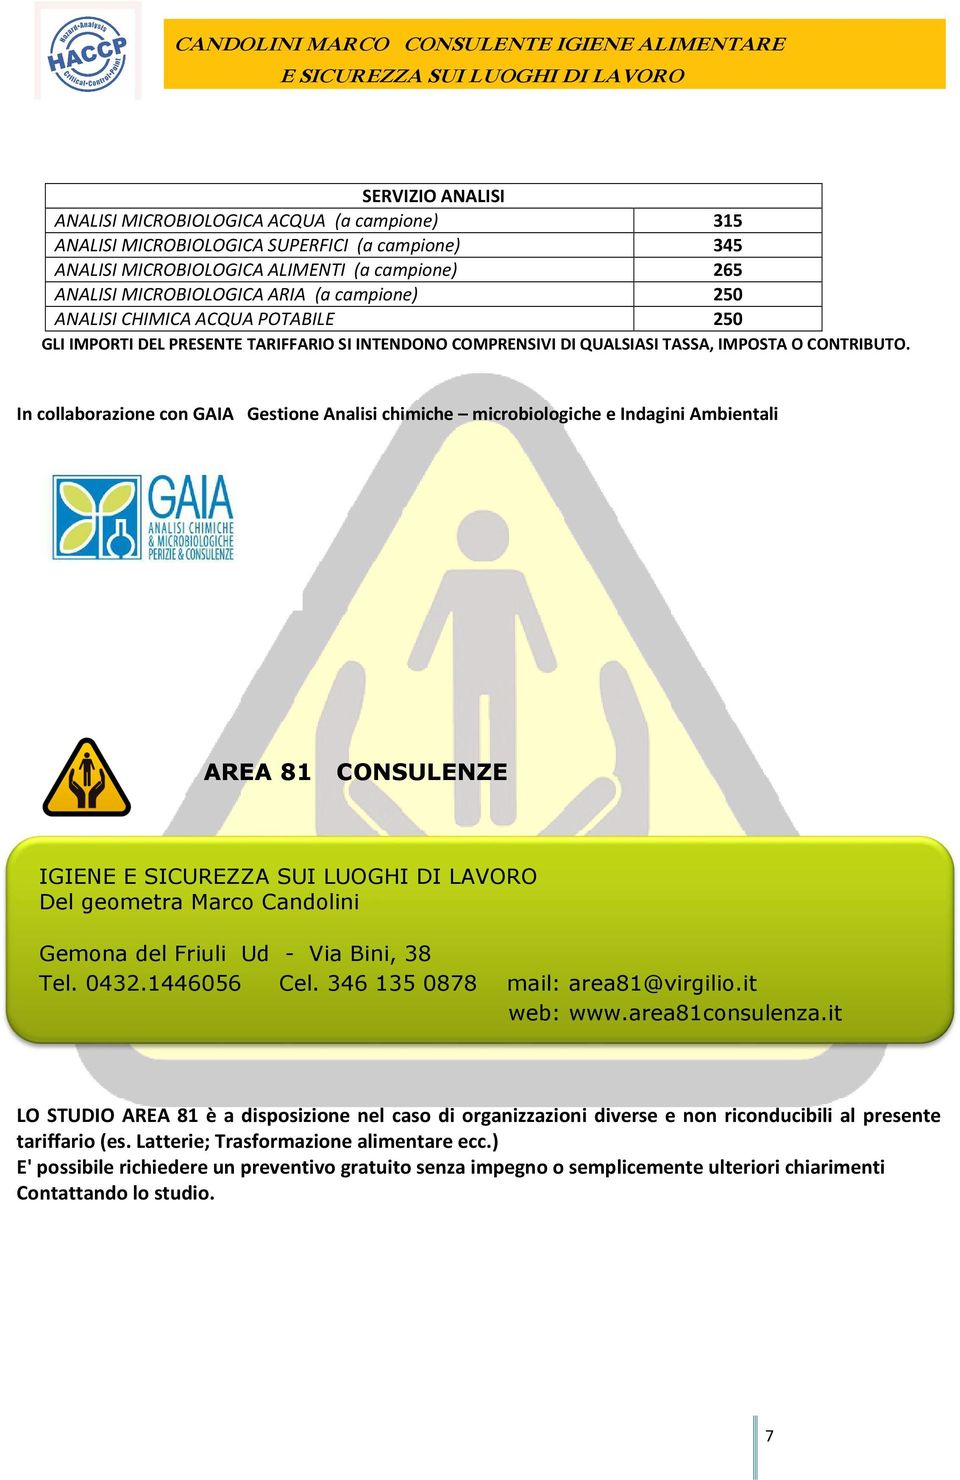 Gemona del Friuli Ud - Via Bini, 38 Tel. 0432.1446056 Cel. 346 135 0878 mail: area81@virgilio.it web: www.area81consulenza.